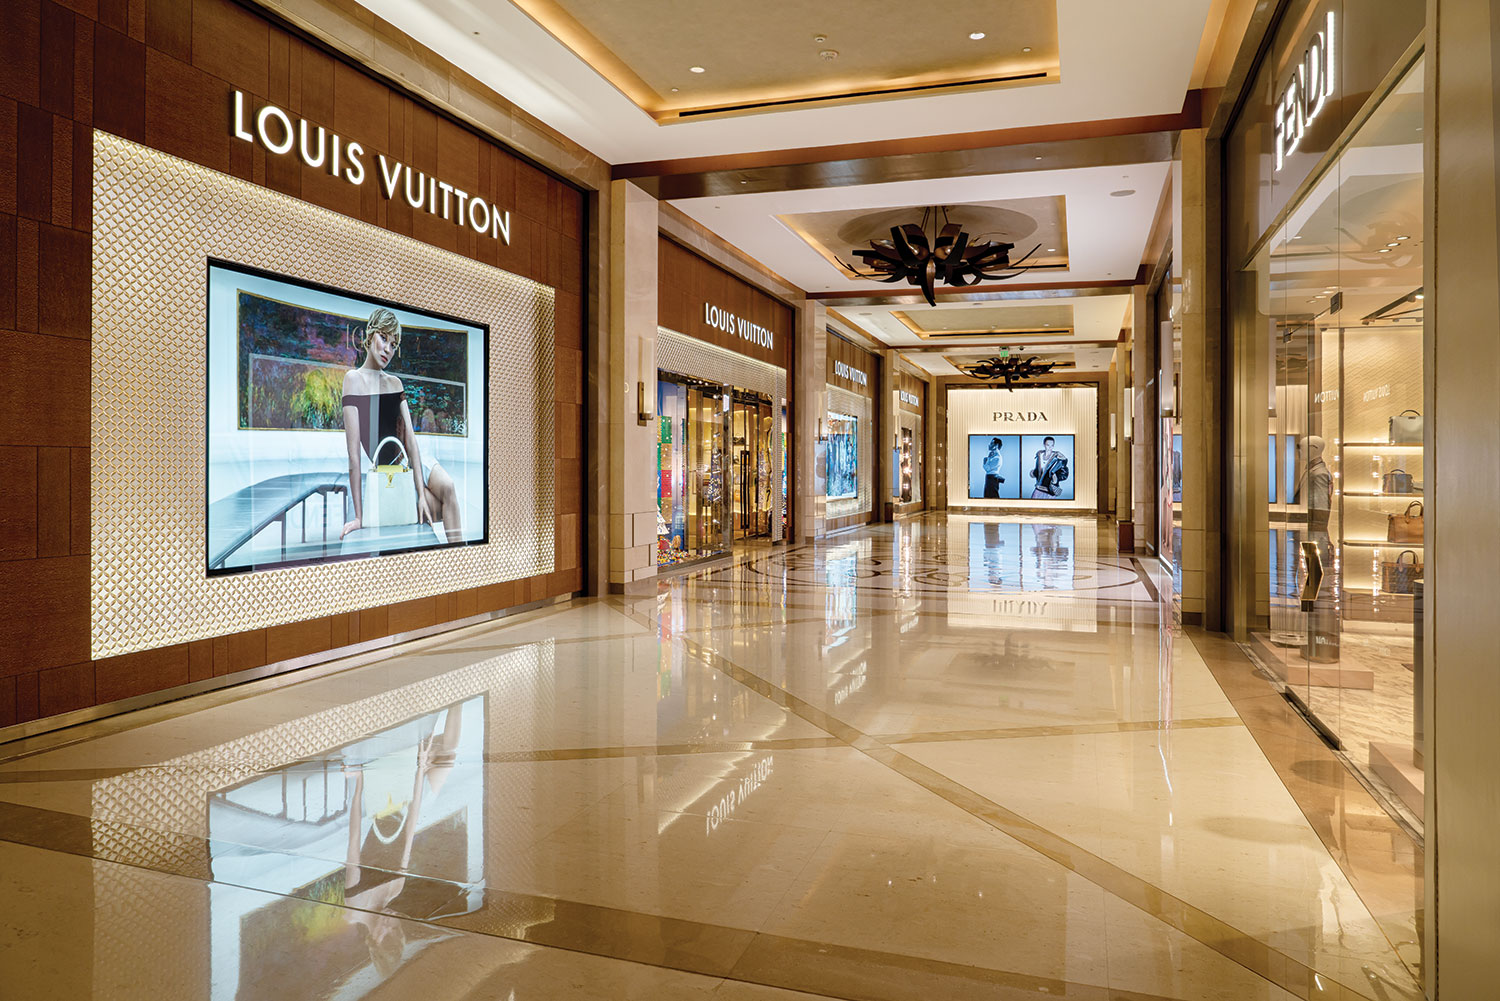 Louis Vuitton Manila Solaire store, Philippines